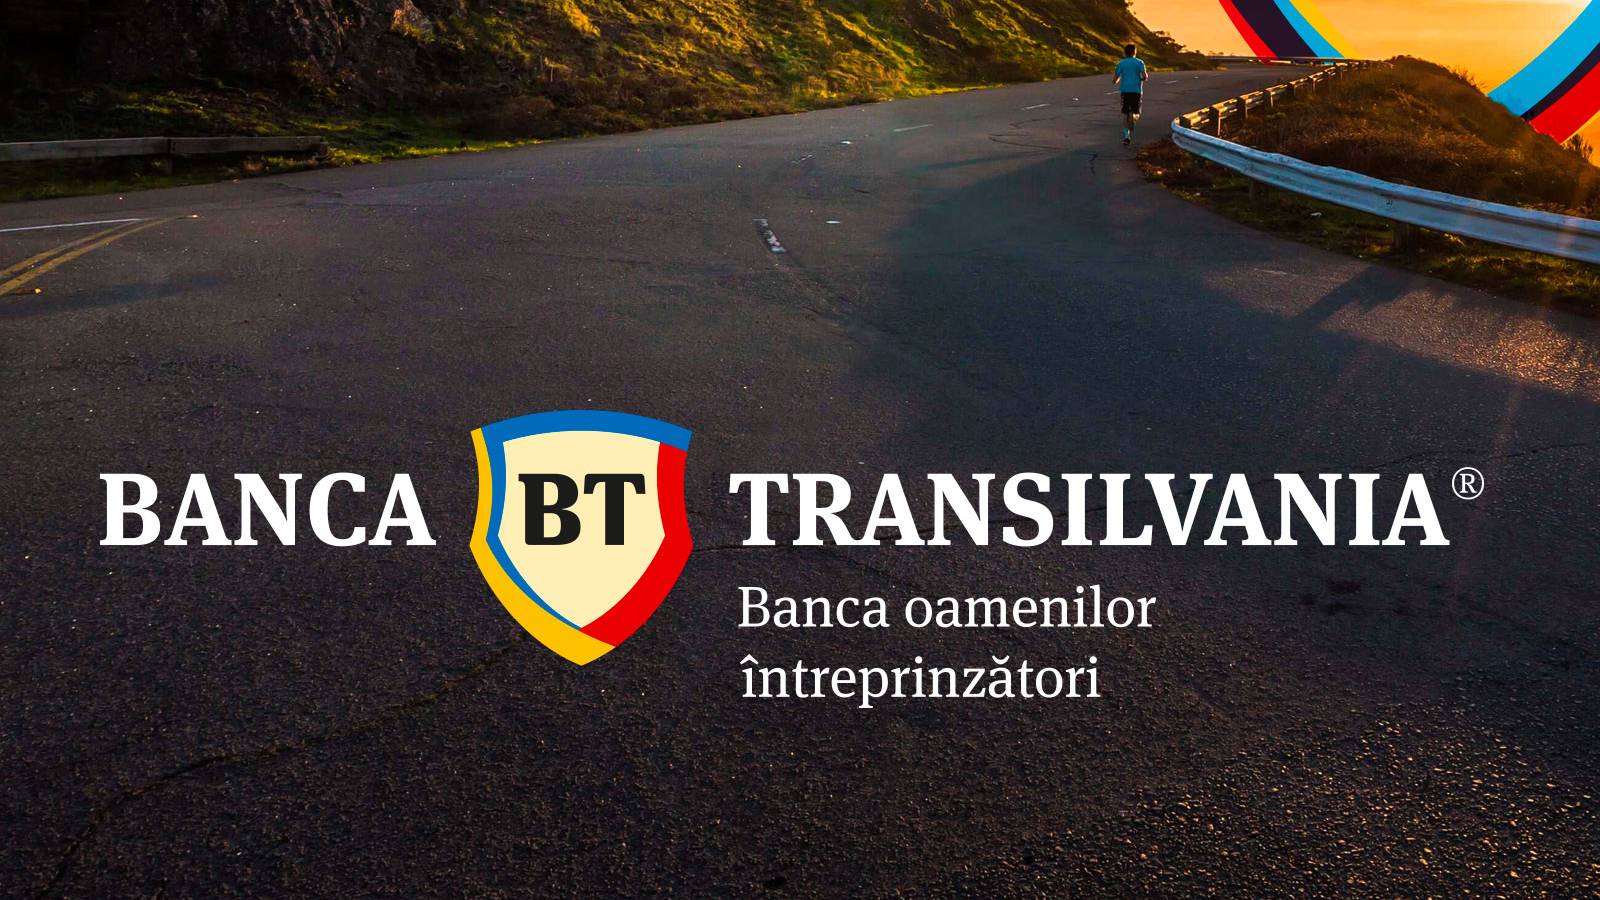 BANCA Transilvania needs